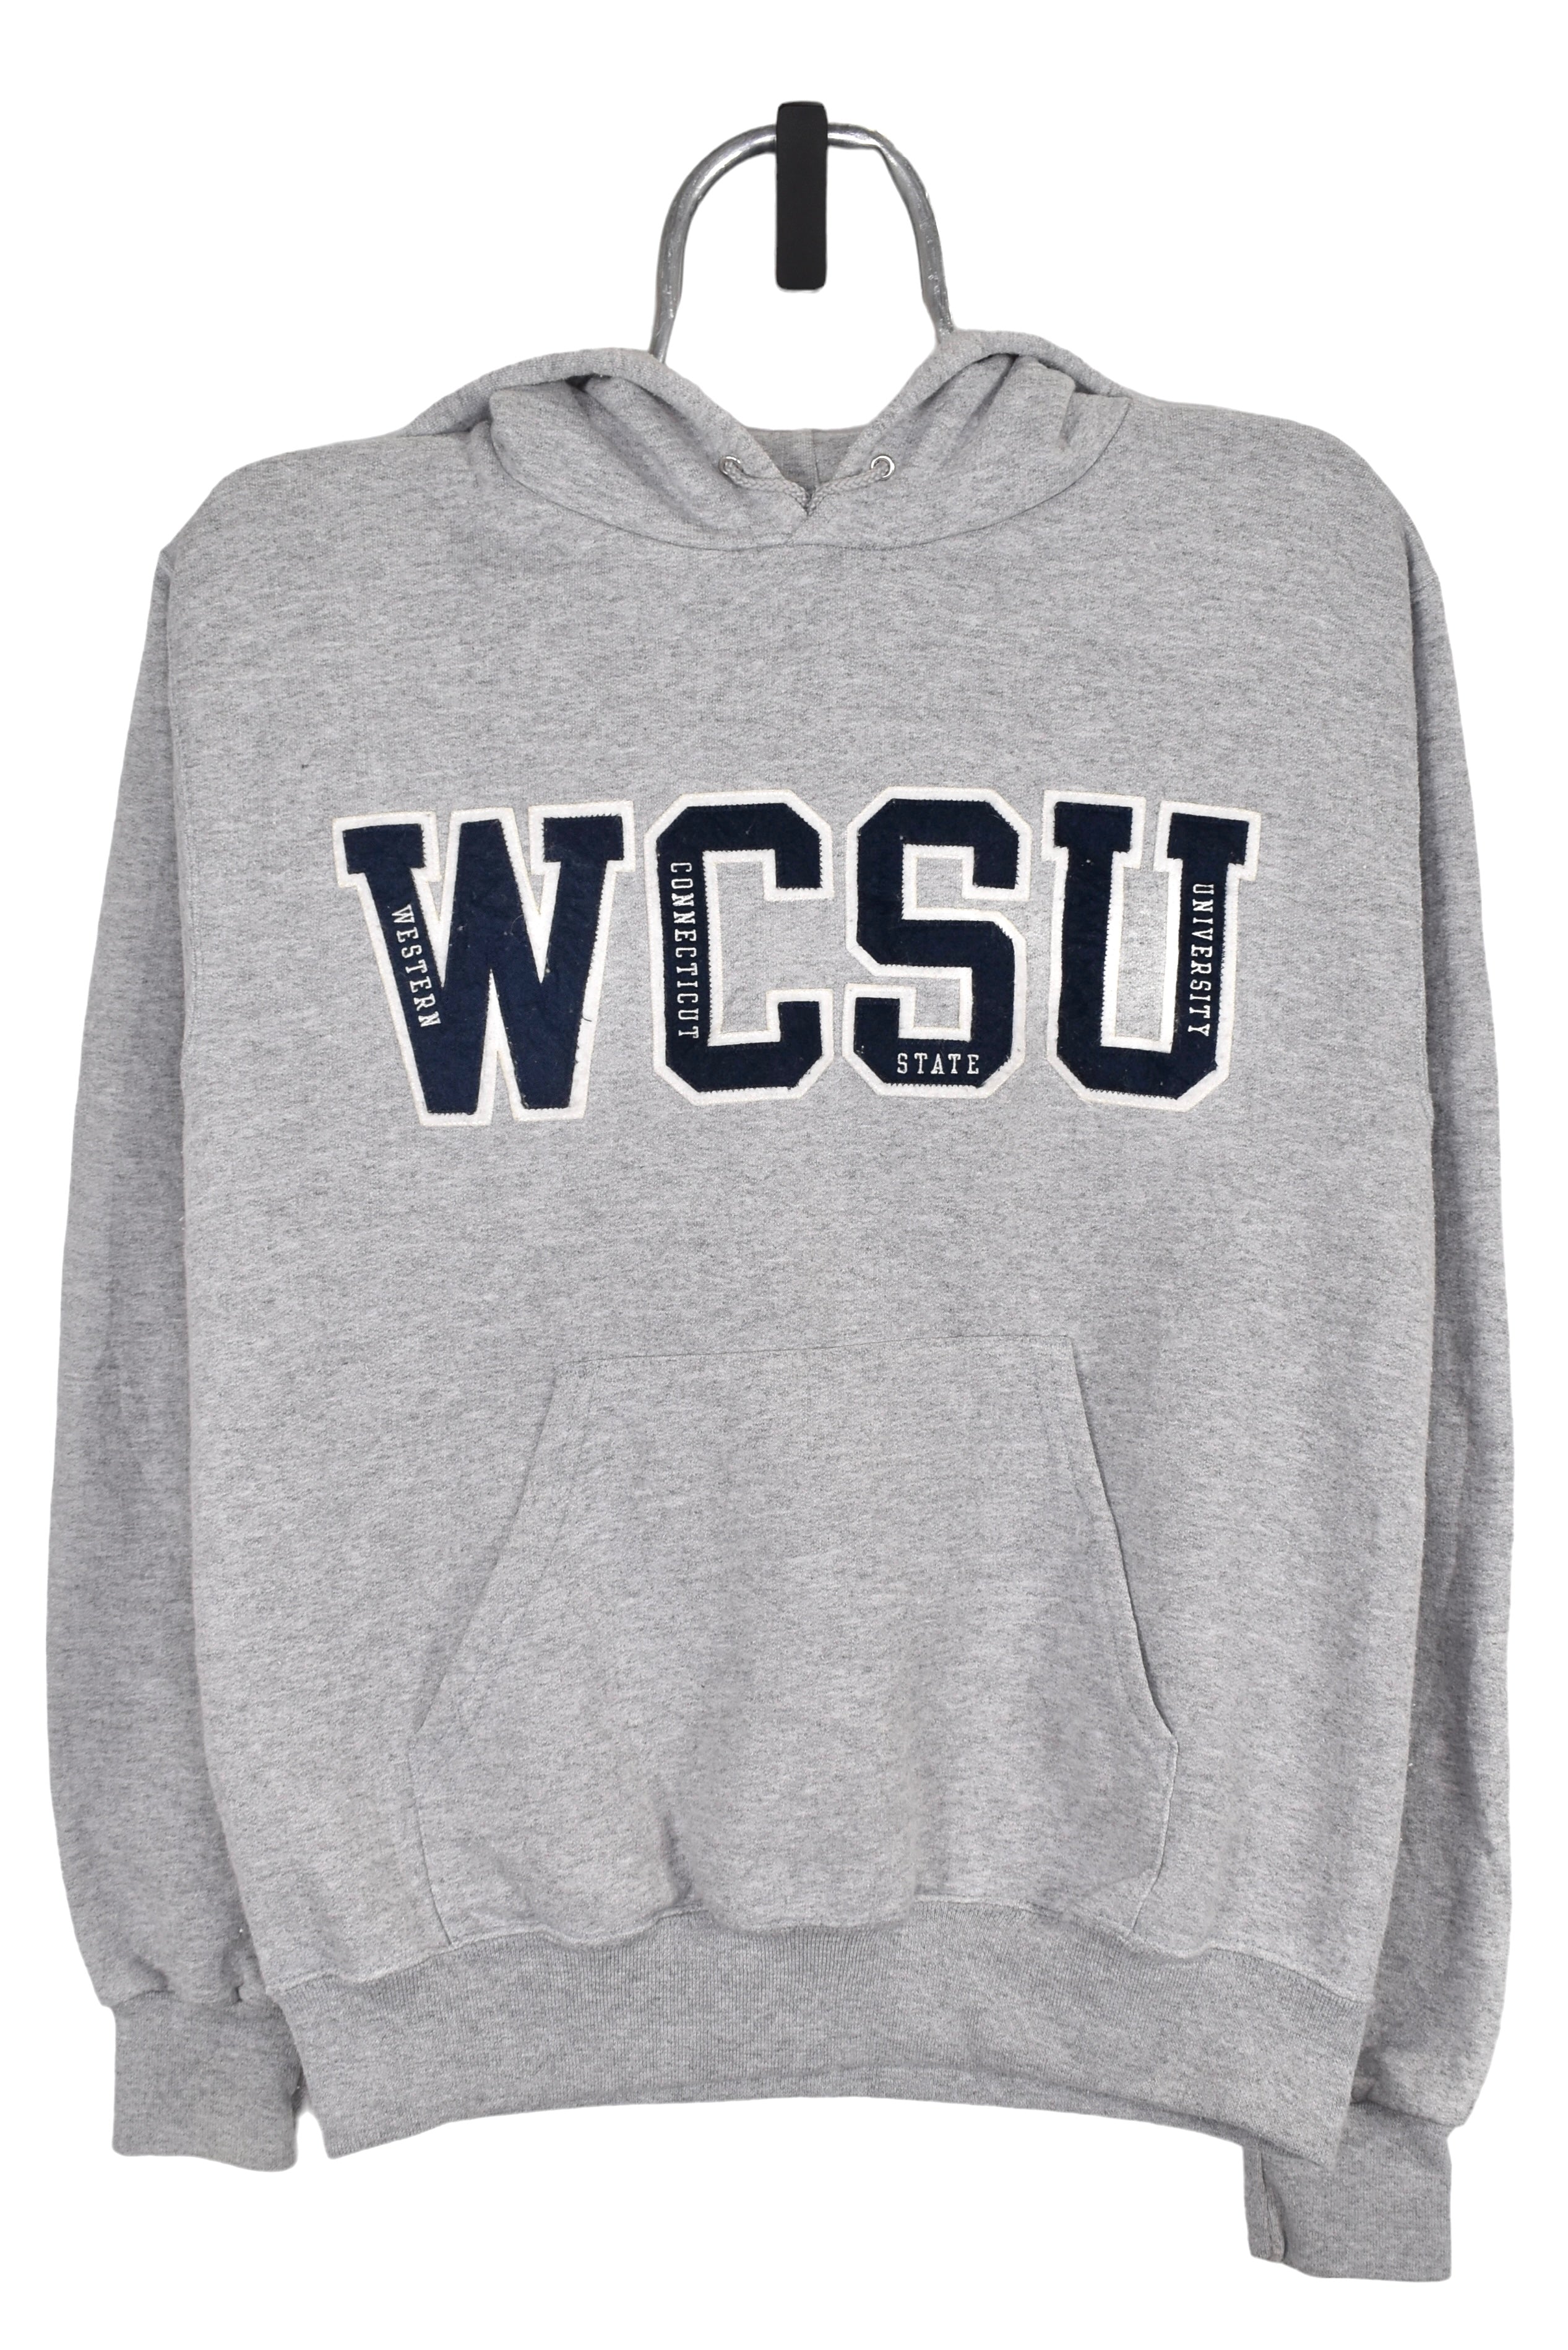 Vintage WCSU hoodie (S), grey embroidered sweatshirt